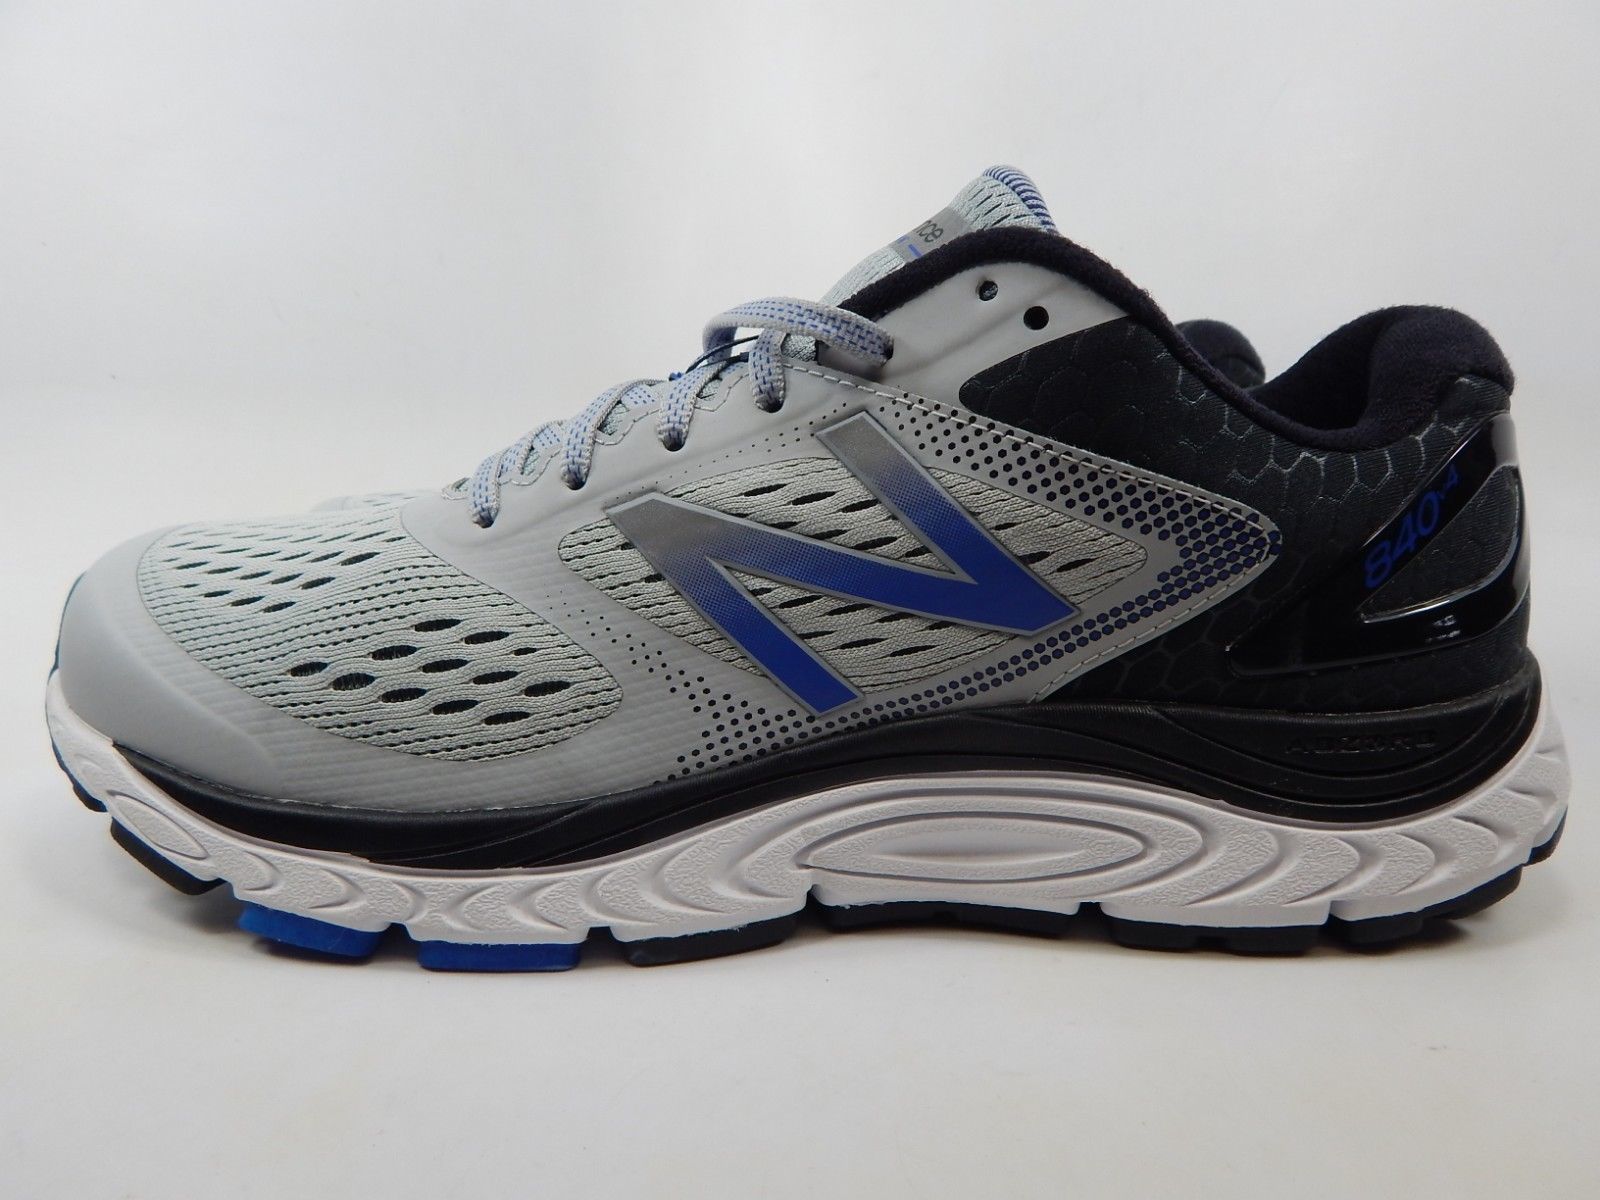 New Balance 840 v4 Size 9.5 M (D) EU 43 Men's Running Shoes Gray Blue ...